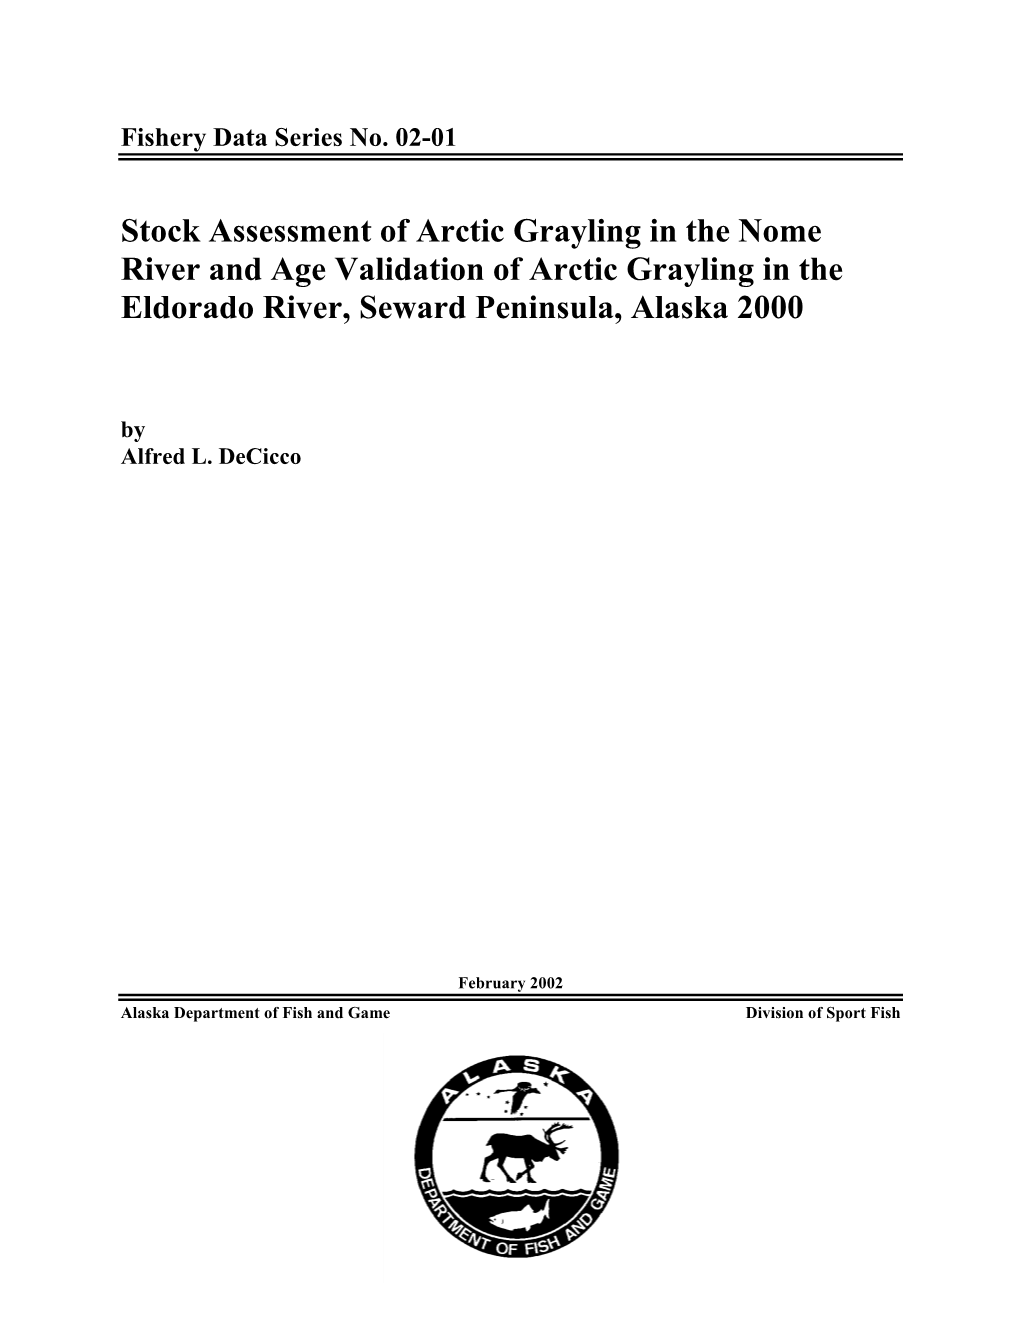 Stock Assessment of Arctic Grayling in the Nome River and Age Validation of Arctic Grayling in the Eldorado River, Seward Peninsula, Alaska 2000